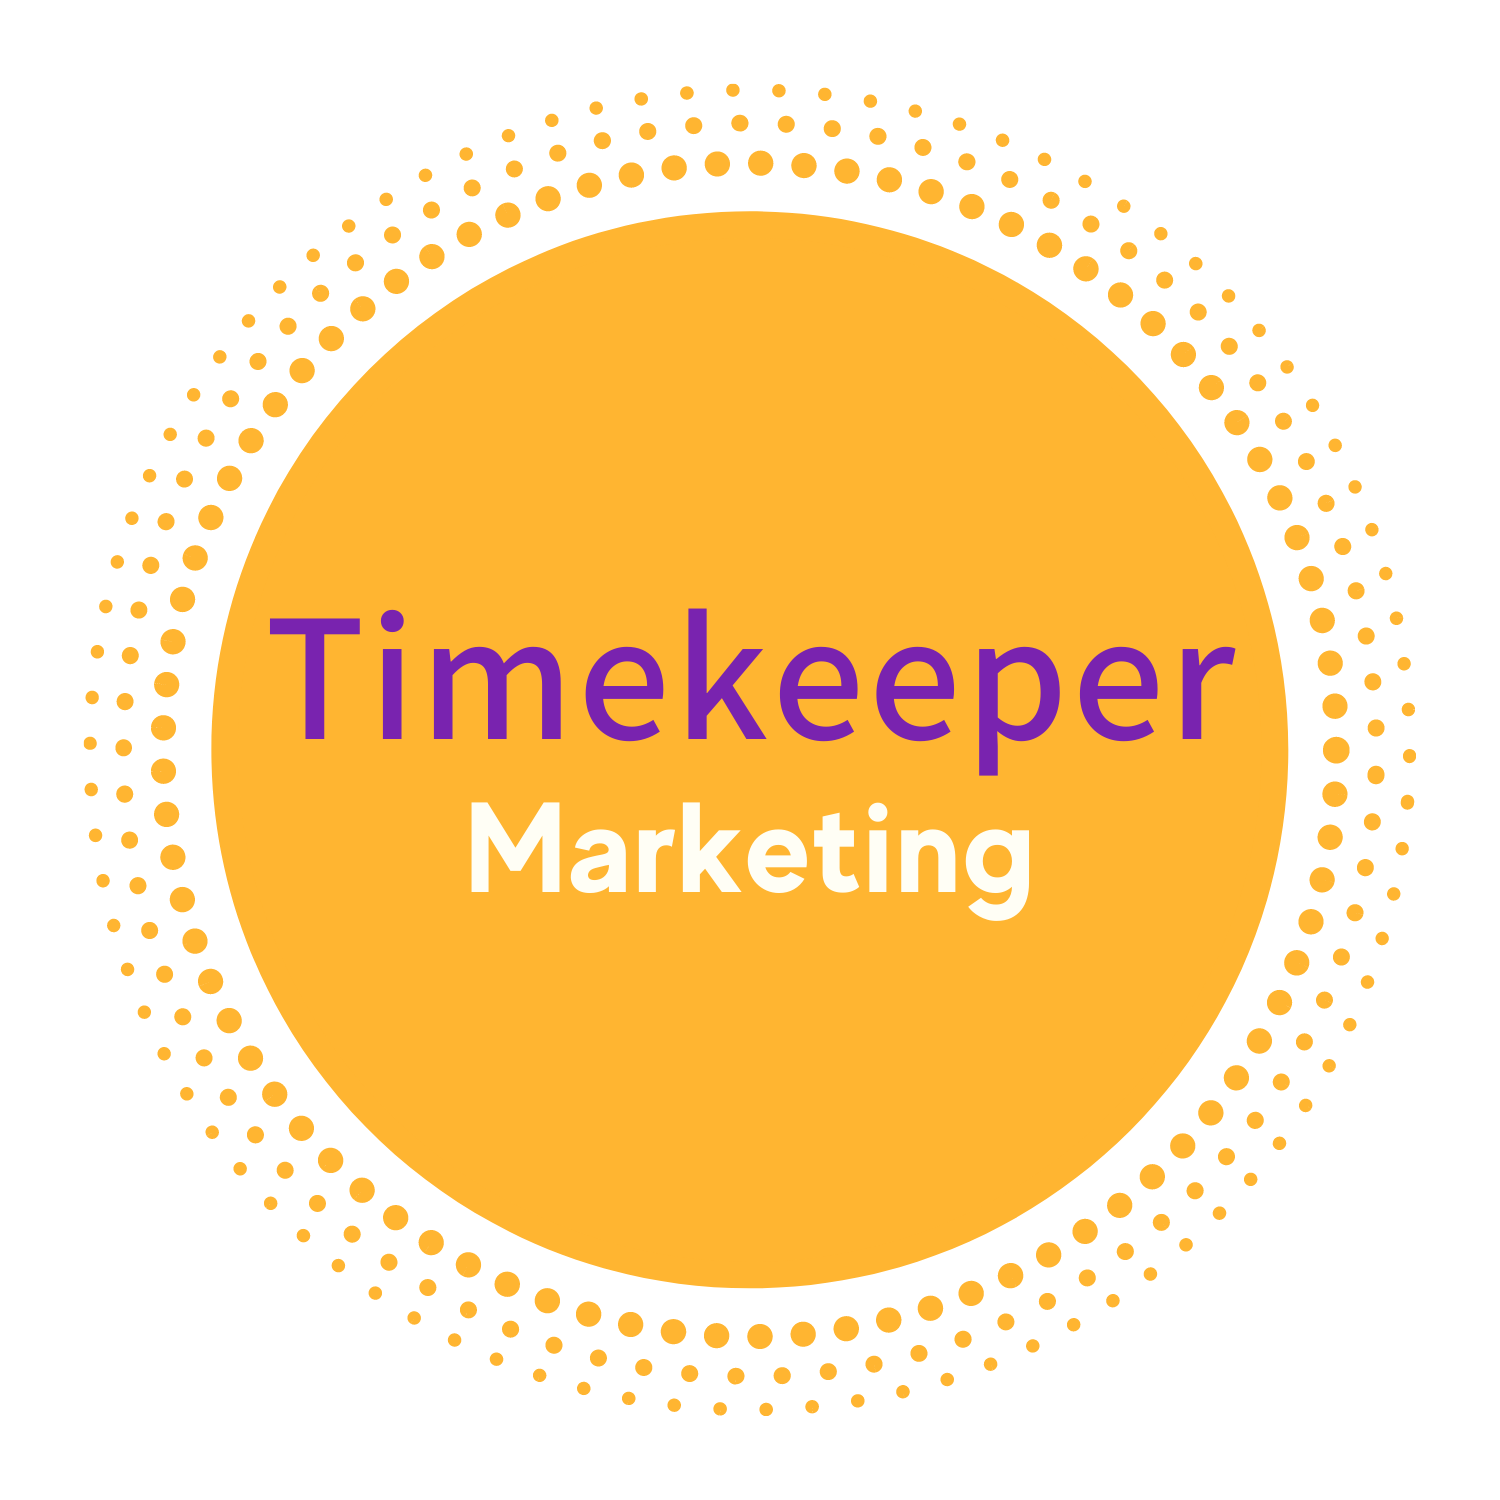 Timekeeper Marketing